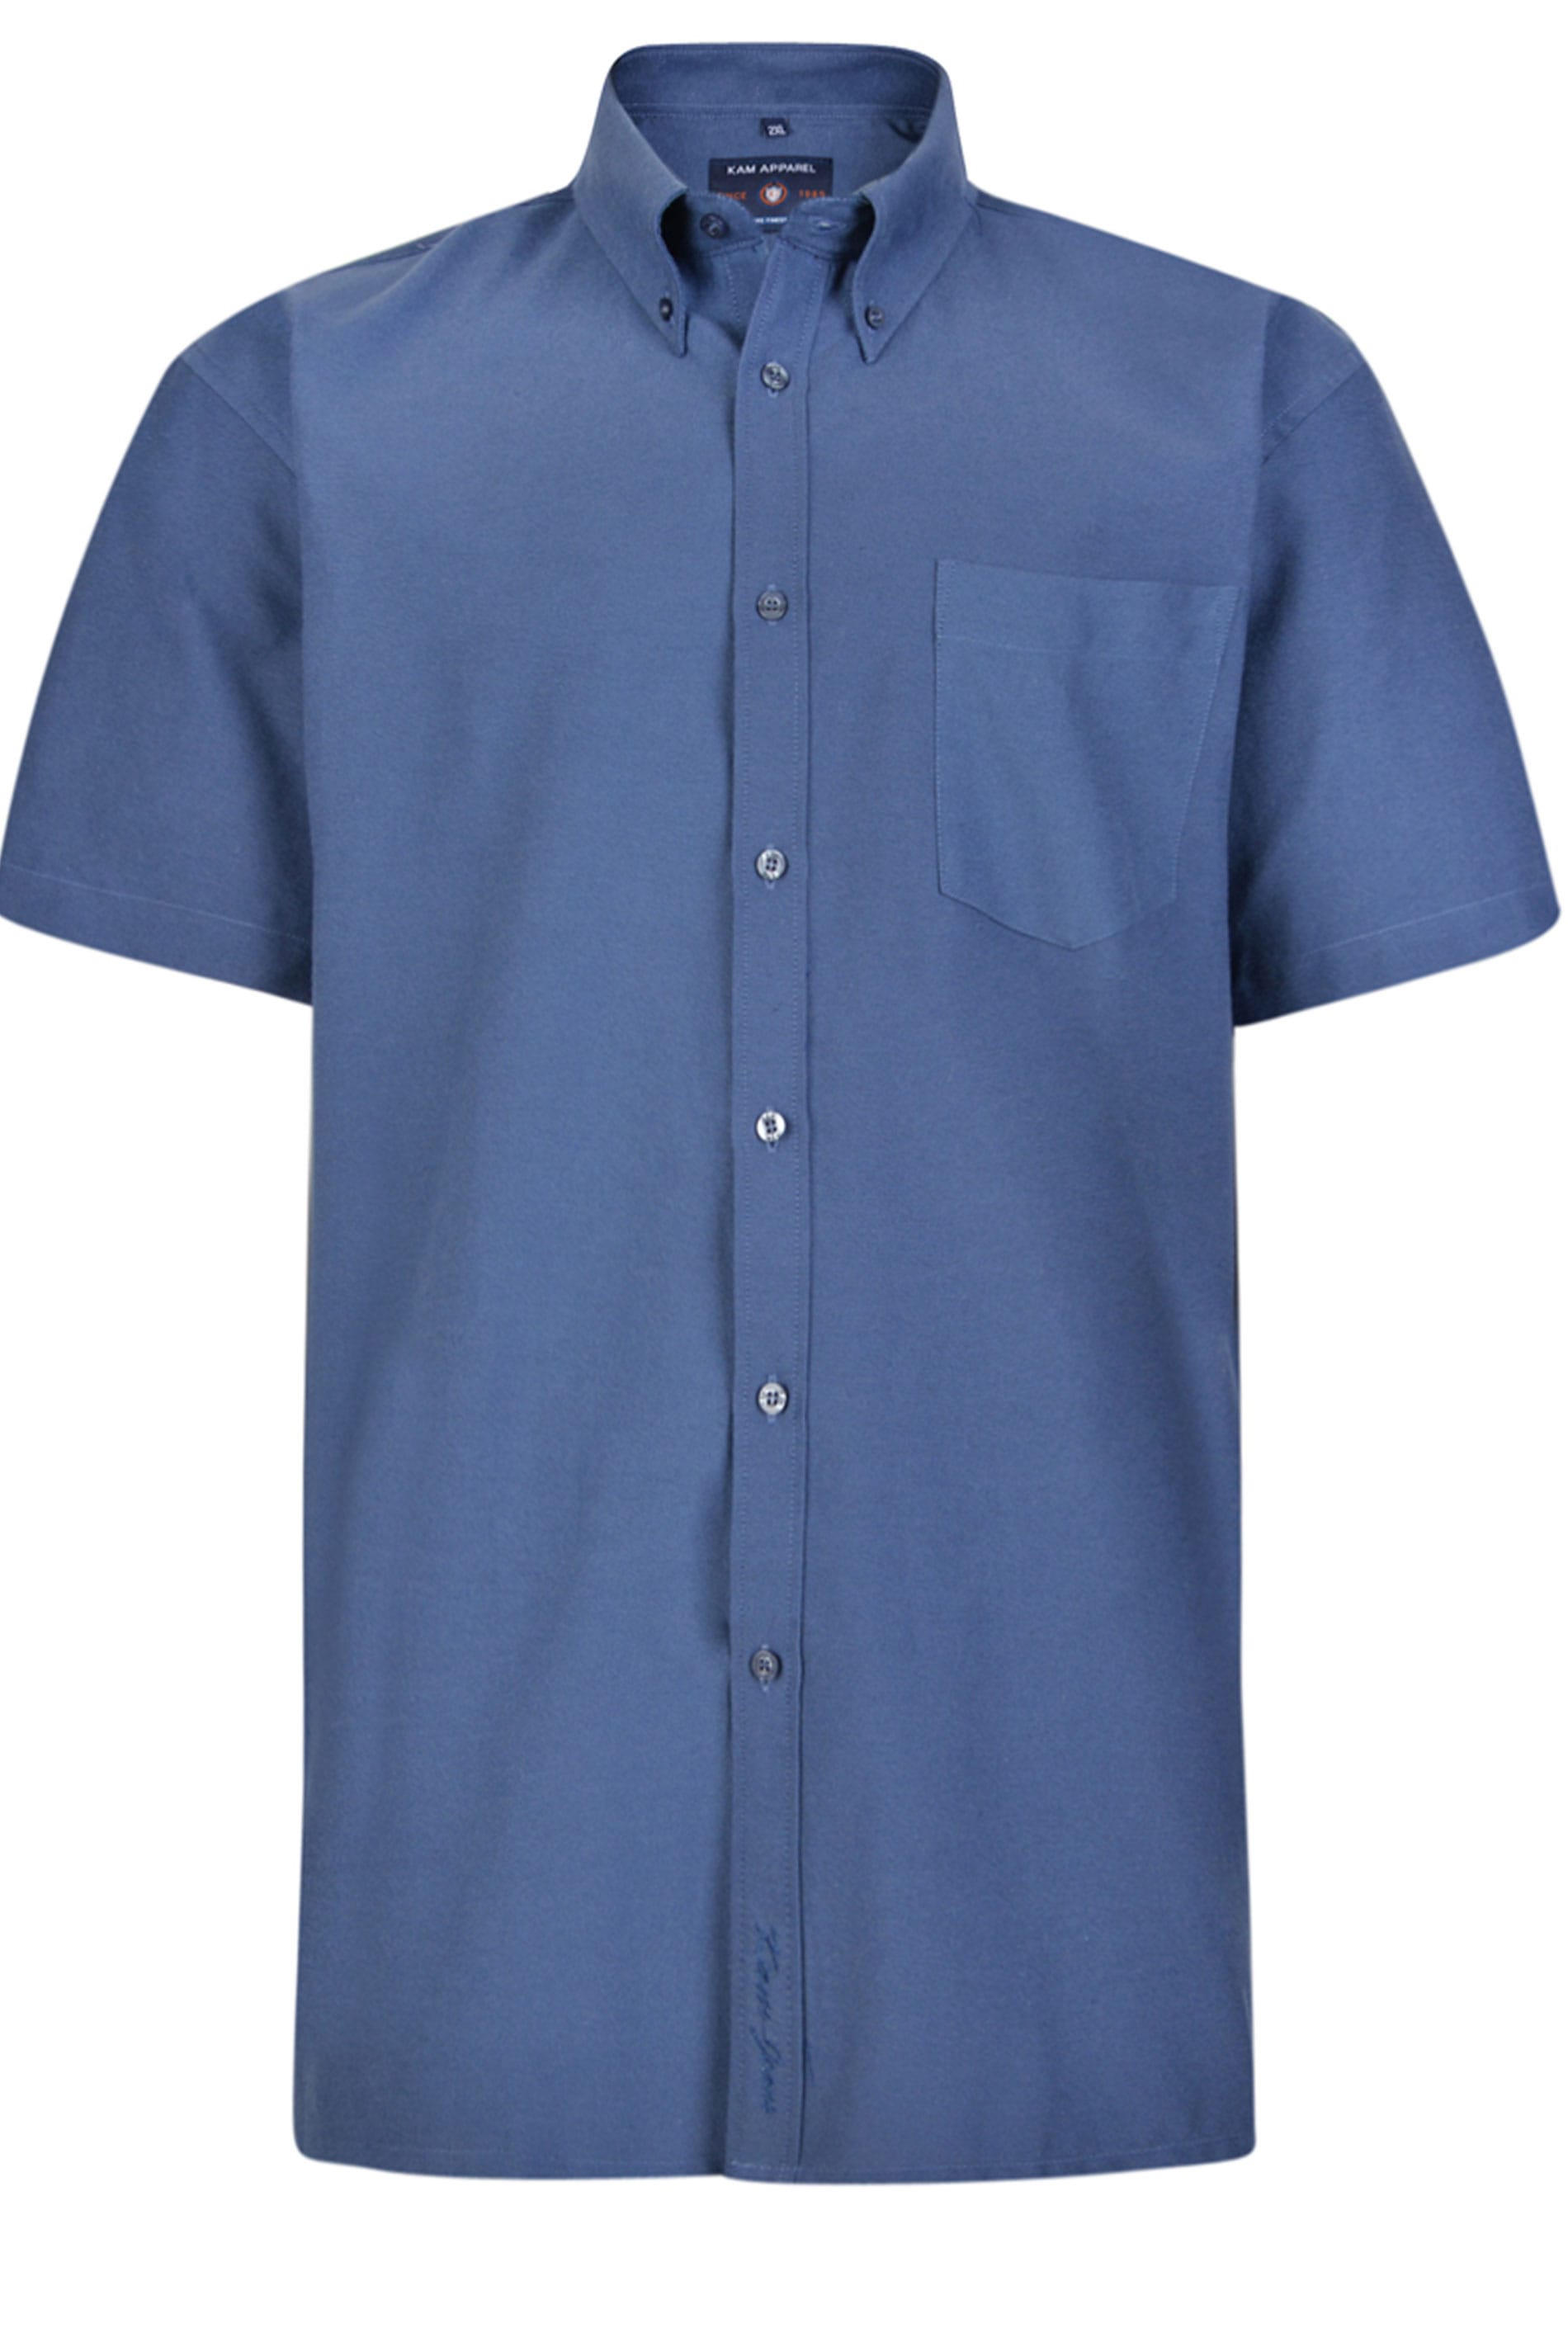 KAM Navy Oxford Short Sleeve Shirt | BadRhino